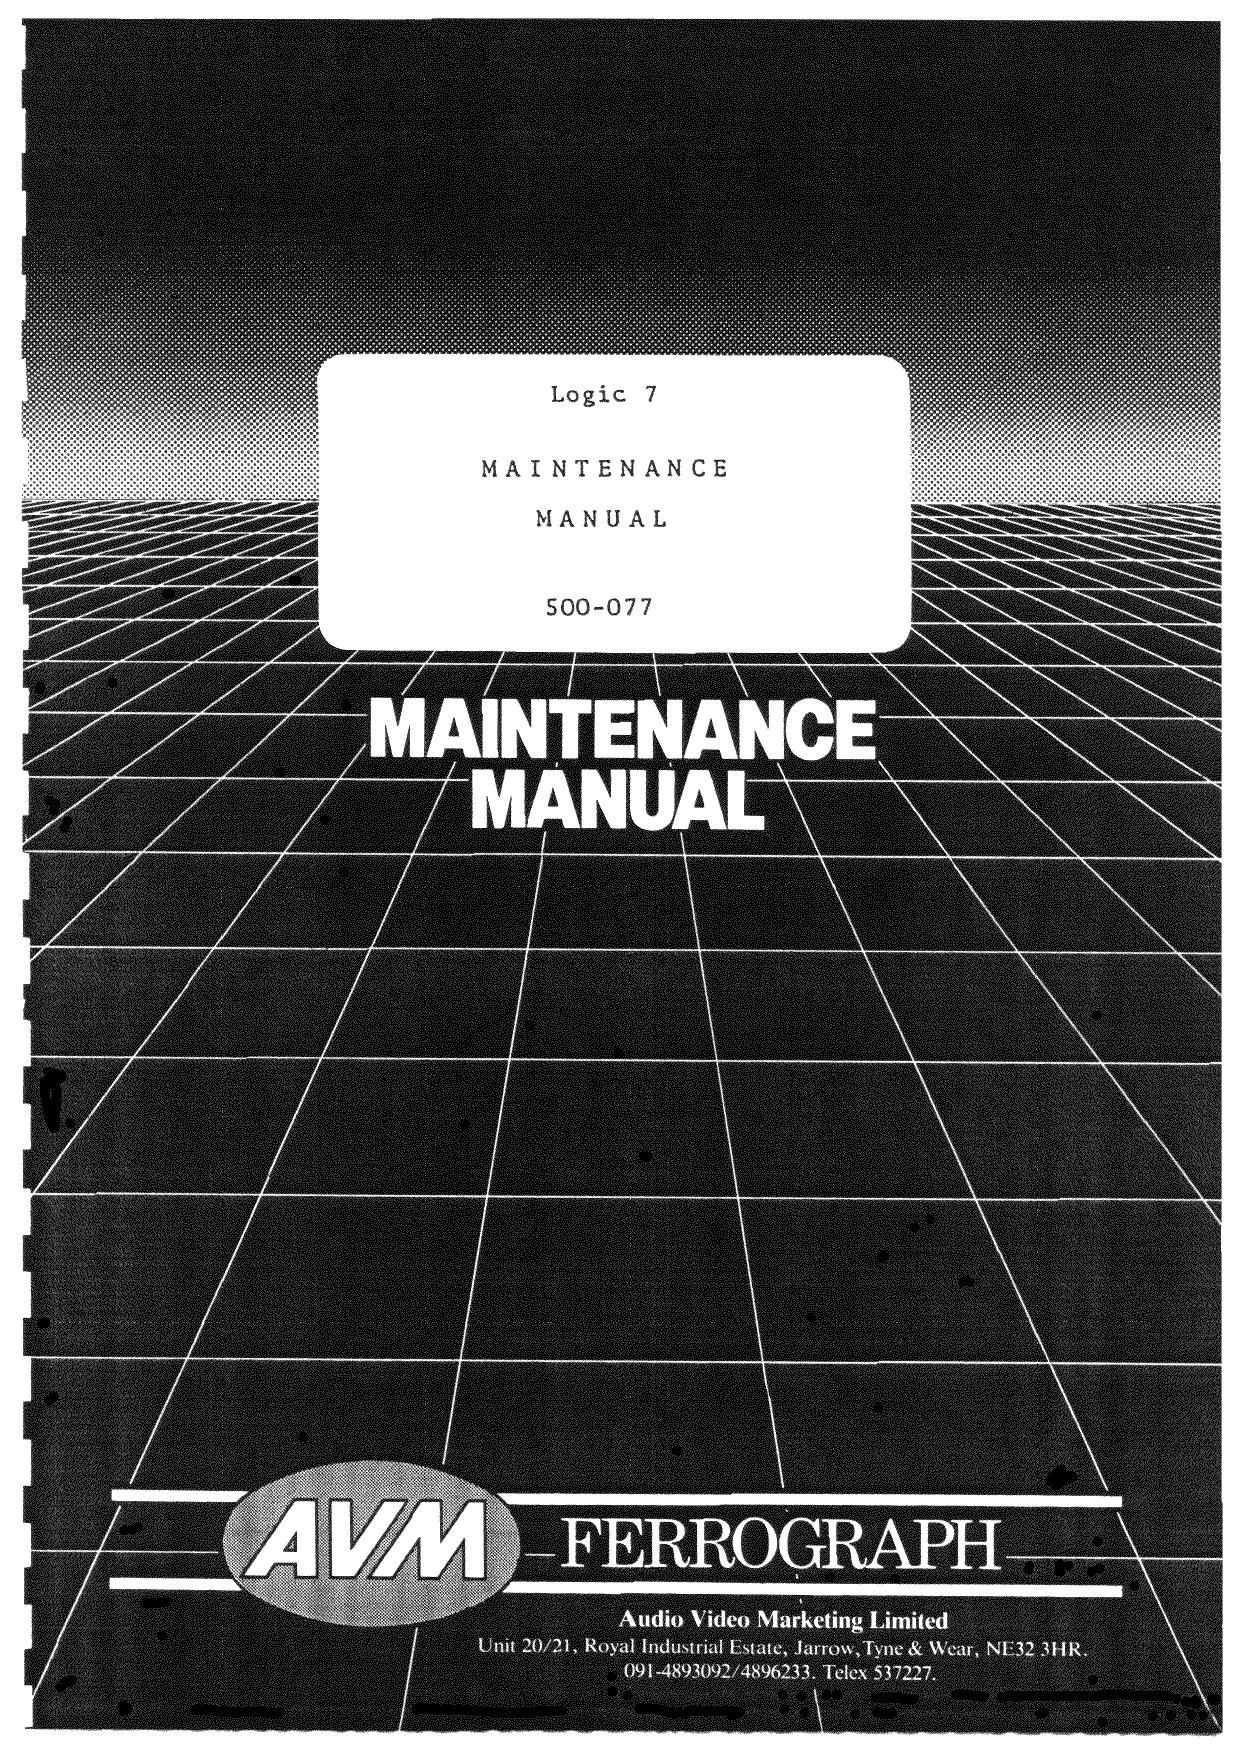 Ferrograph Logic 7 Service Manual